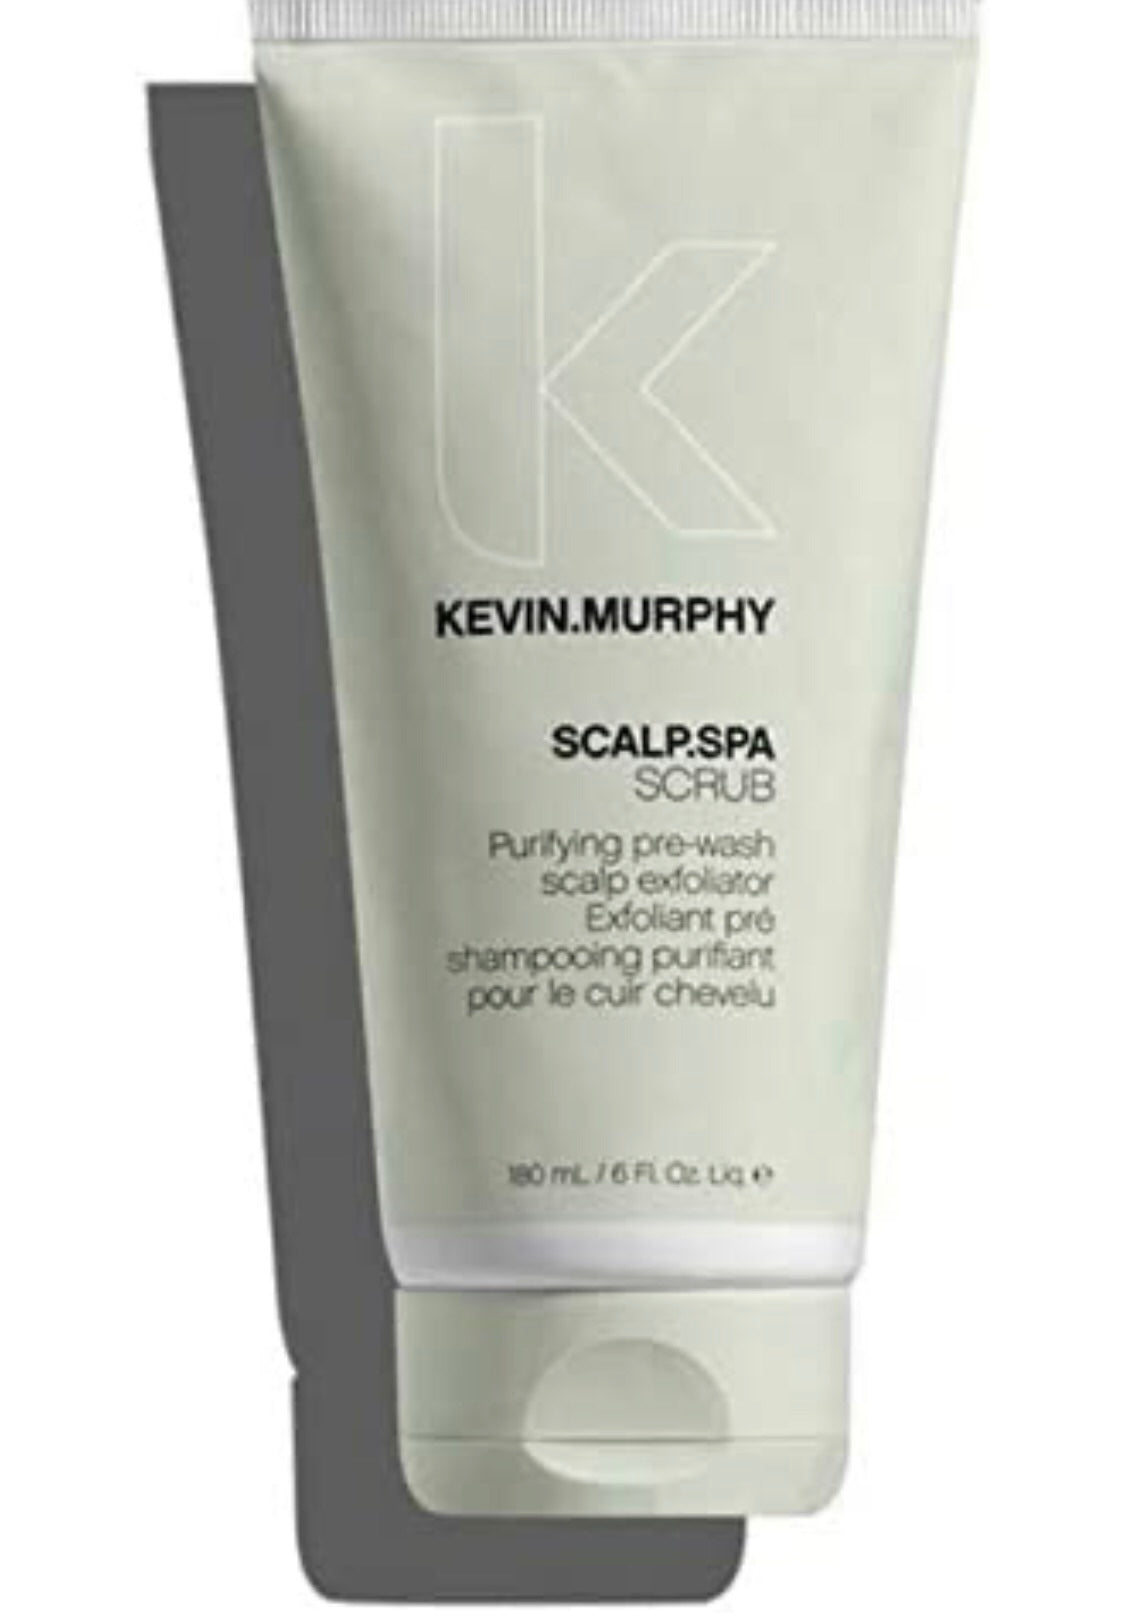 Kevin.Murphy - Scalp.SPA scrub 6 fl. oz. / 180 ml